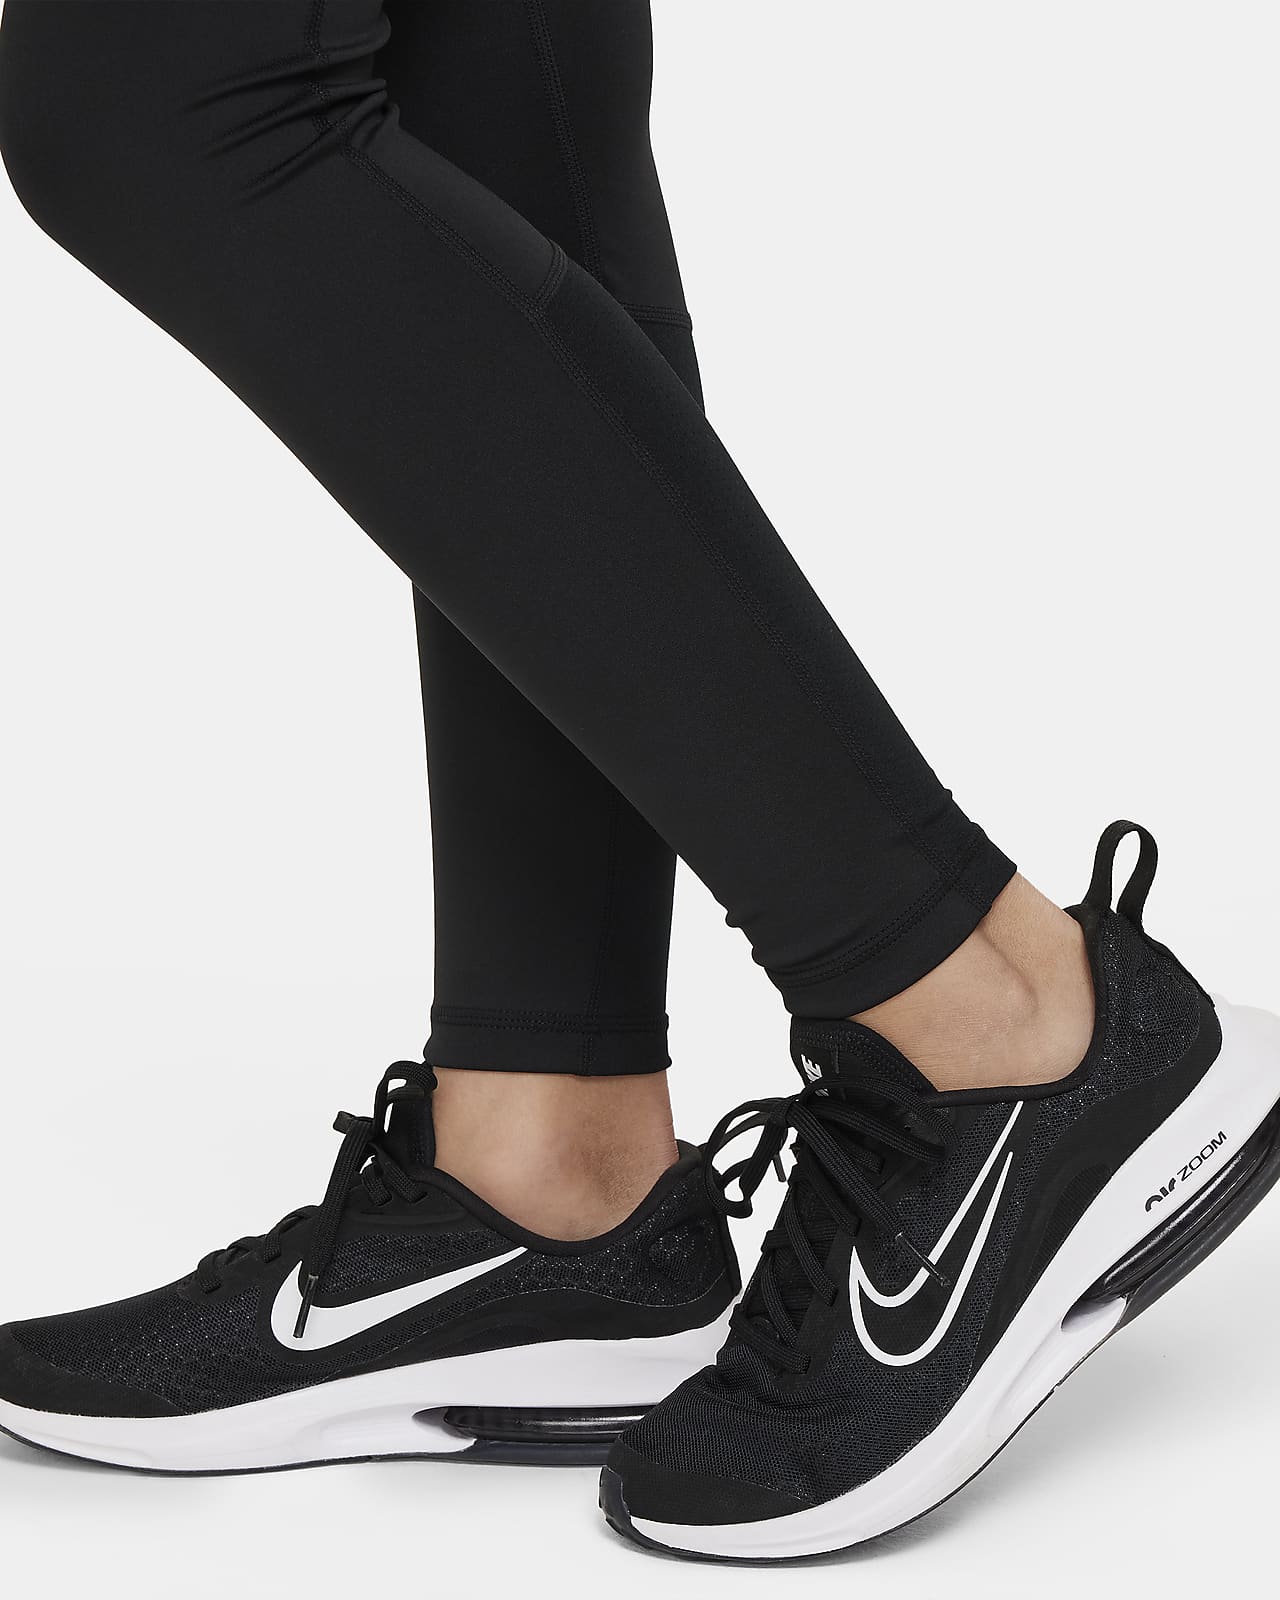 Nike Pro 679445 Girls' $45 Warm Tights Thermal Pants Training